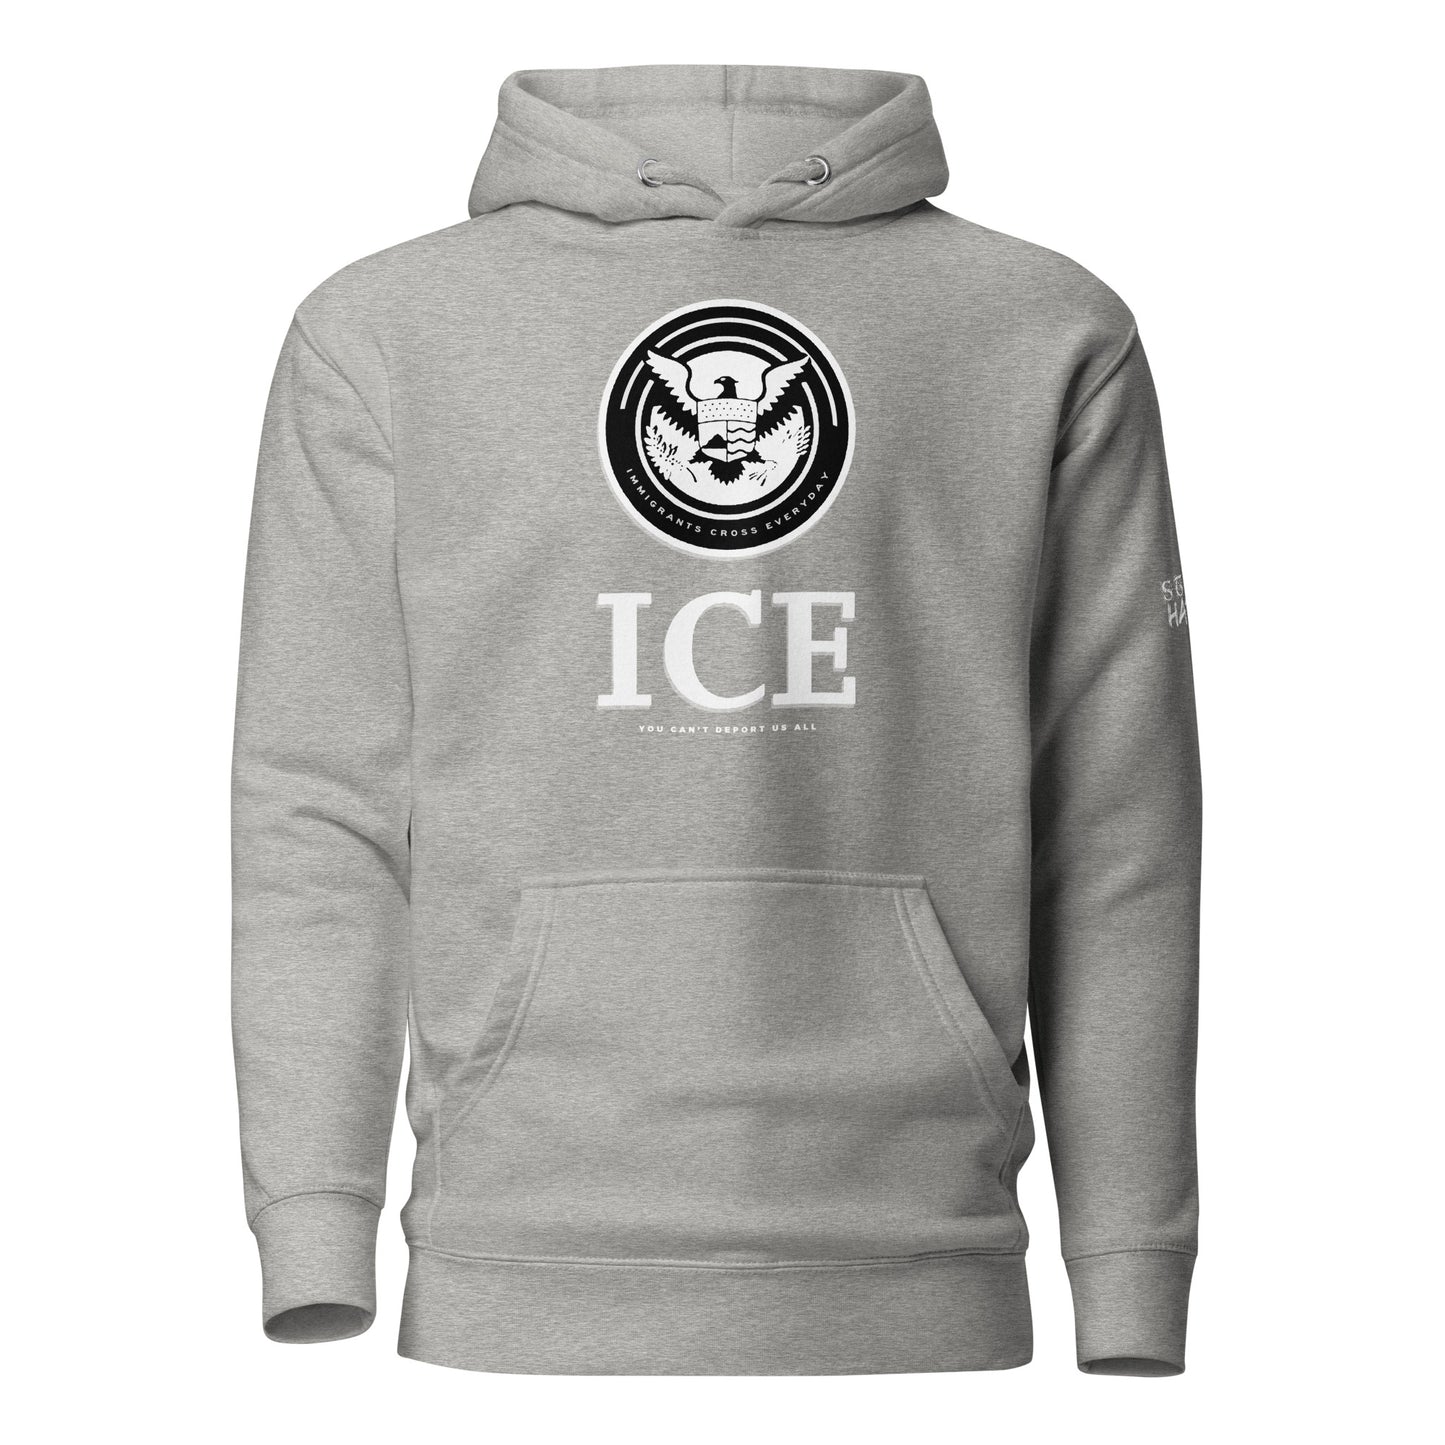 ICE V1 - Unisex Hoodie